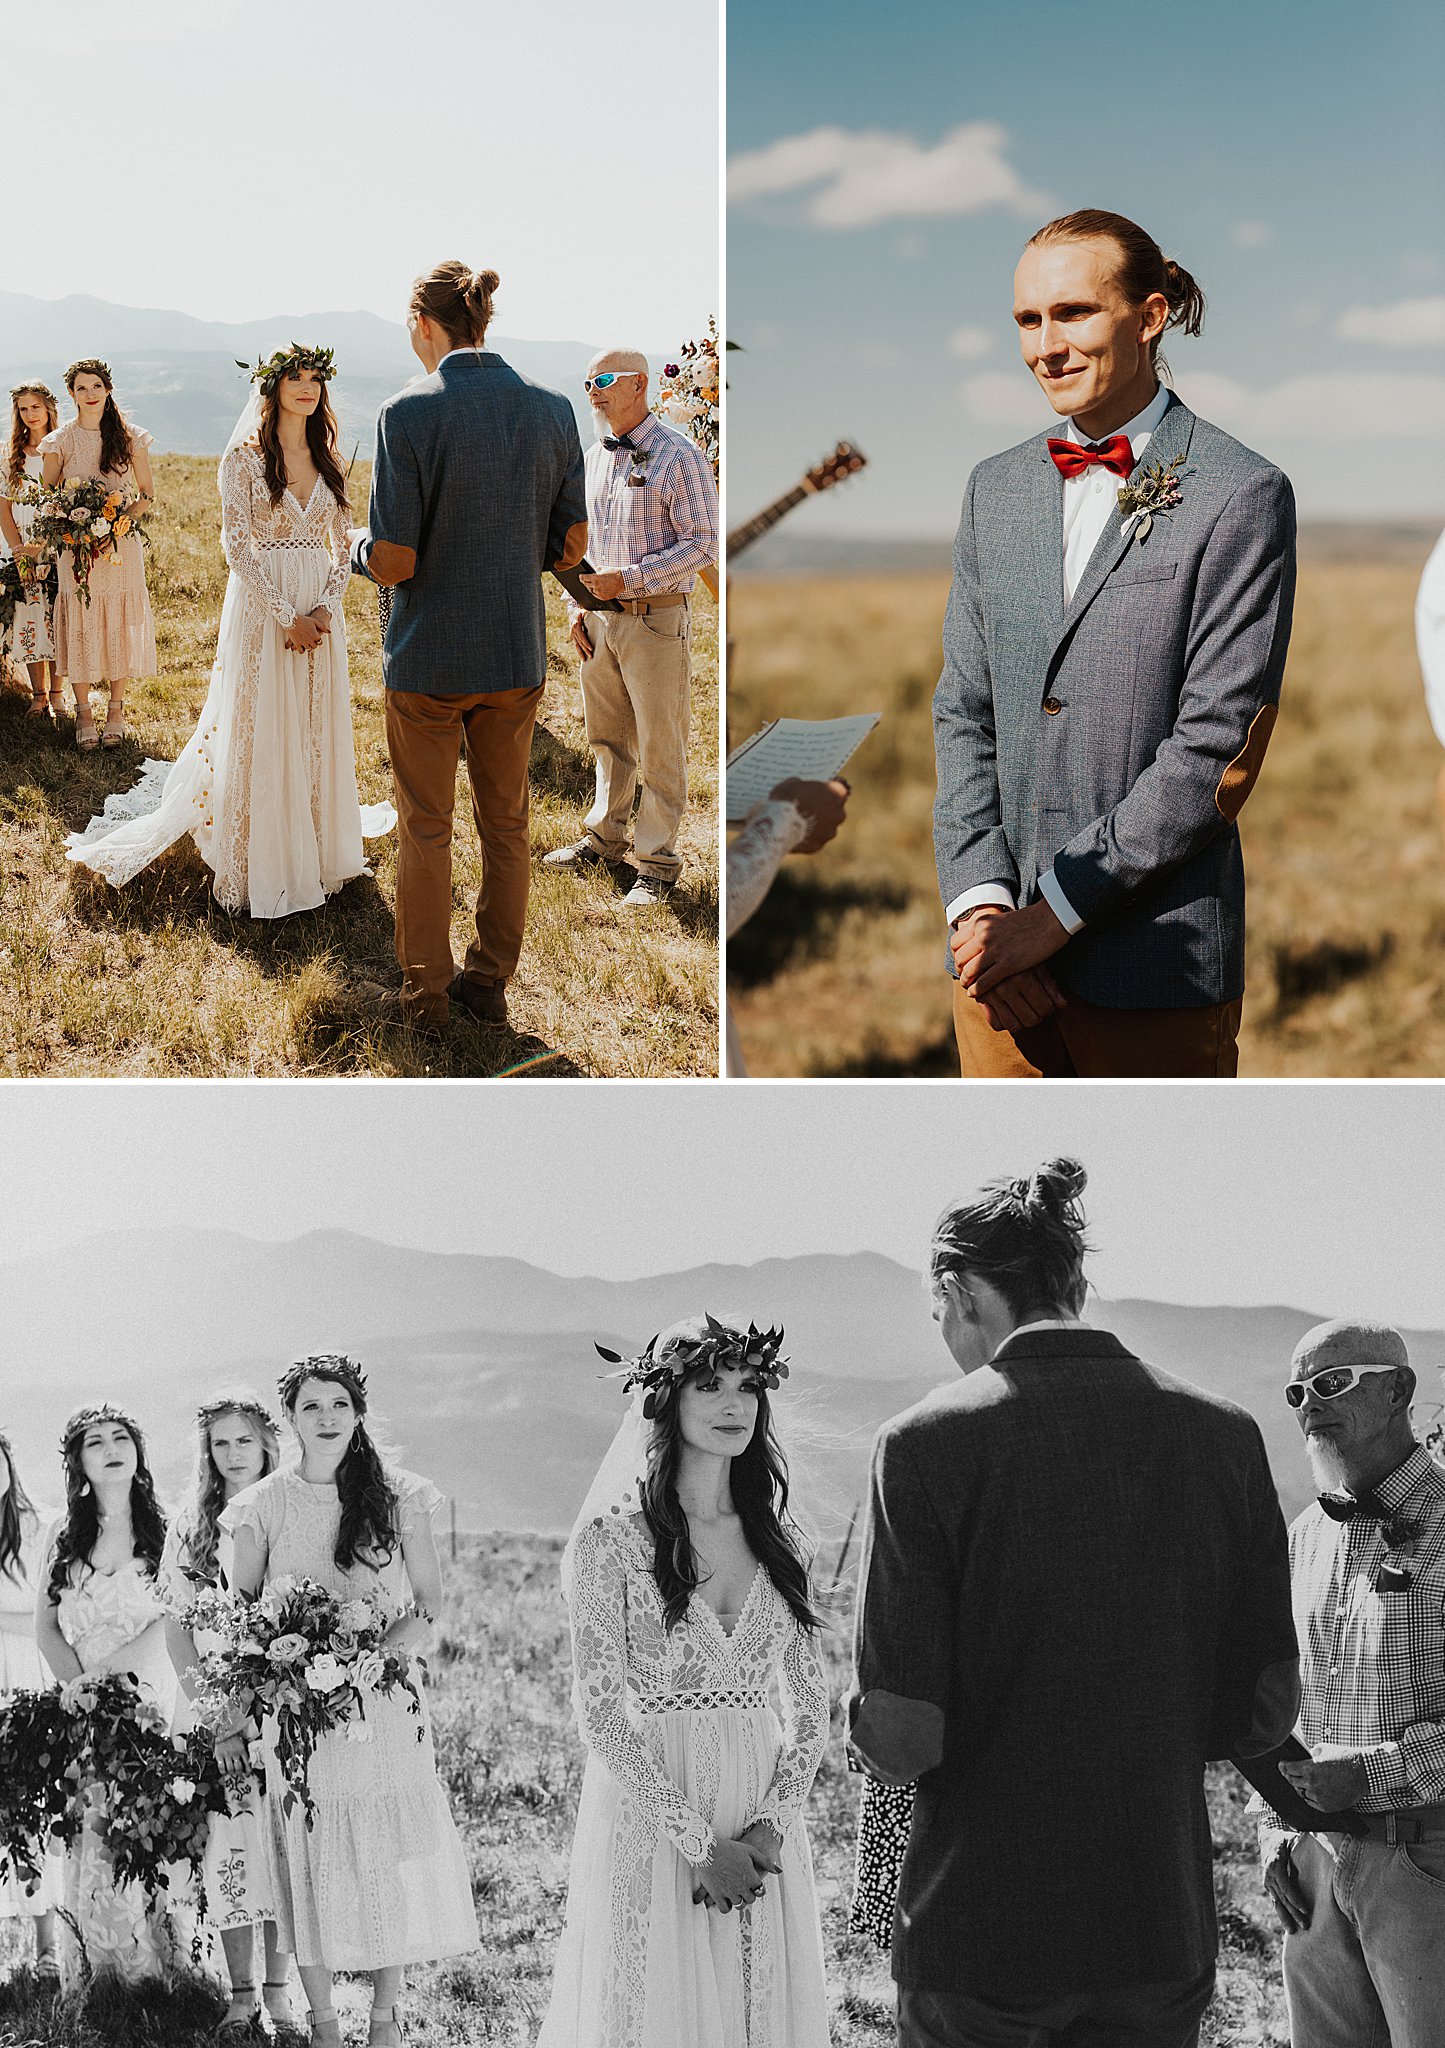 Ceremony photos in the mountains at their adventurous Santa Fe Wedding.